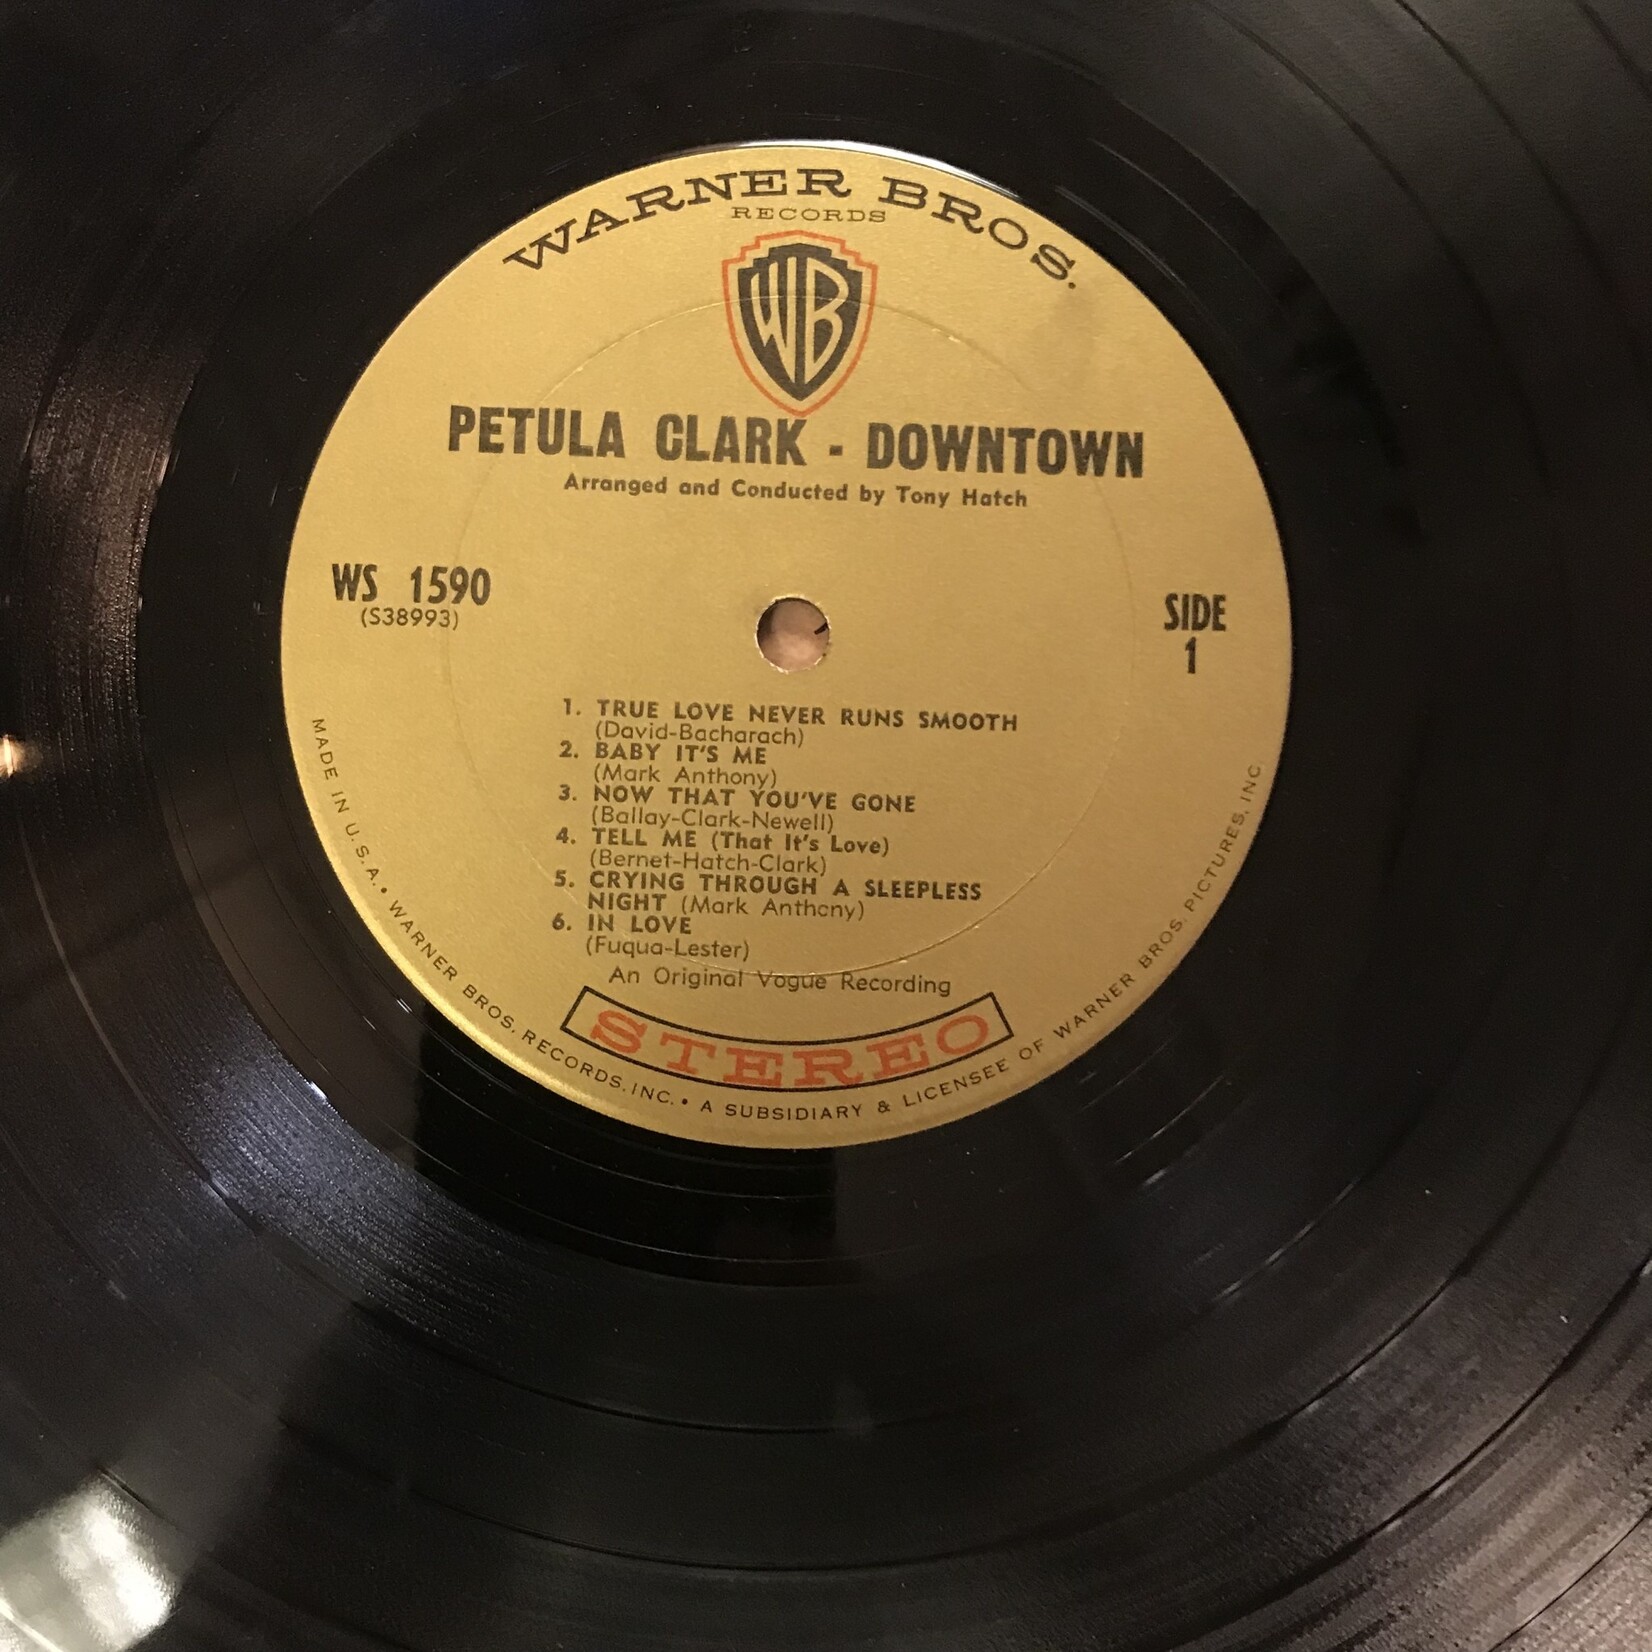 Petula Clark - Downtown - WS1590 - Vinyl LP (USED)